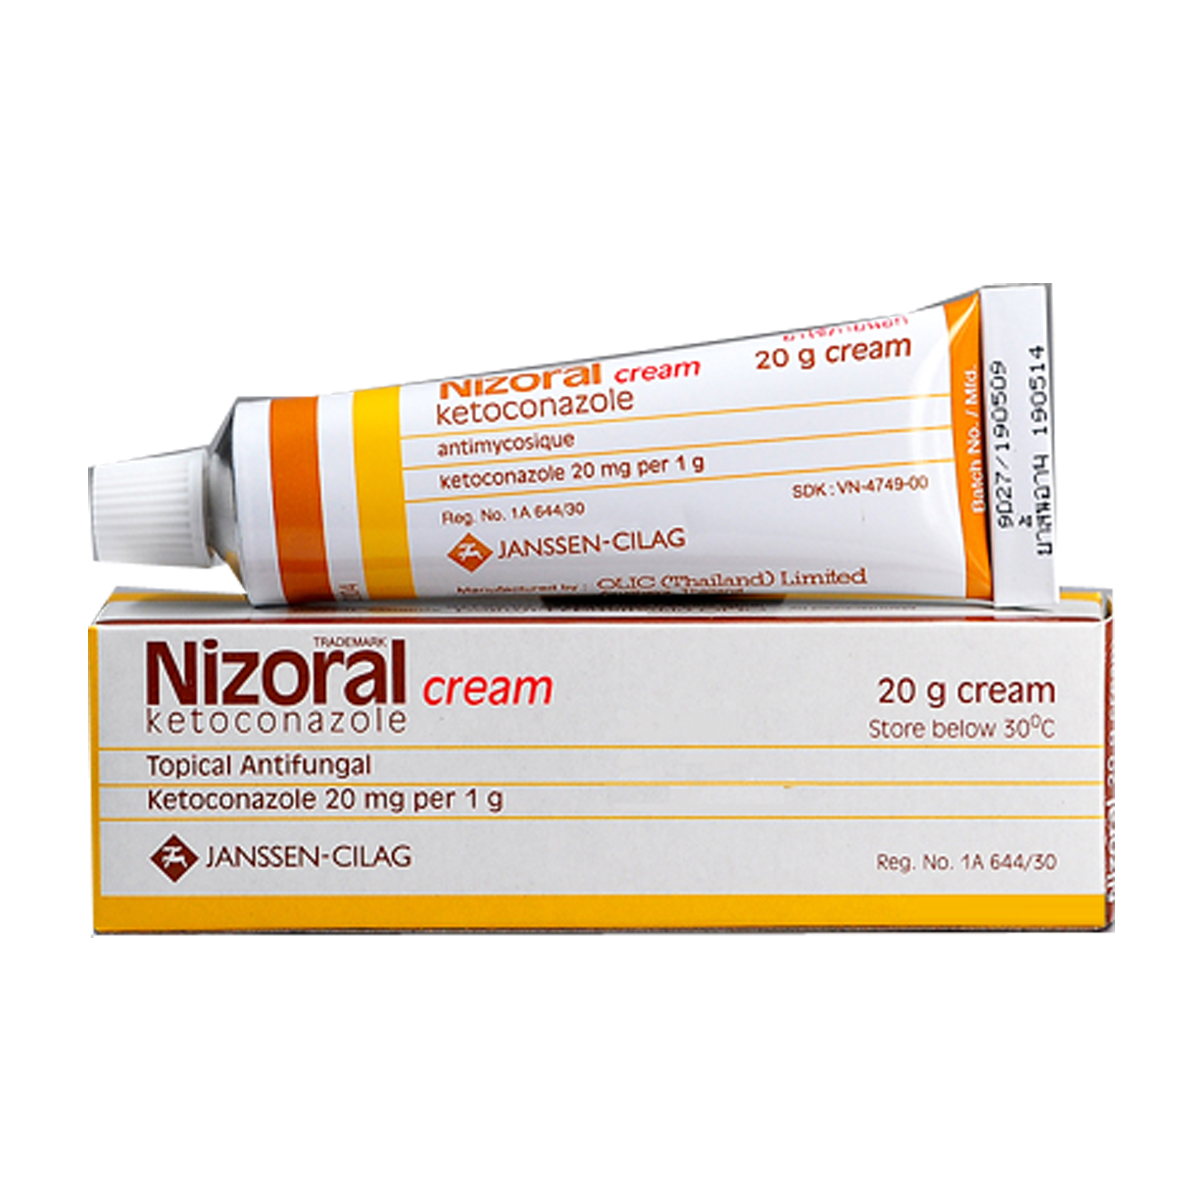 doxazosin mesylate drugs.com